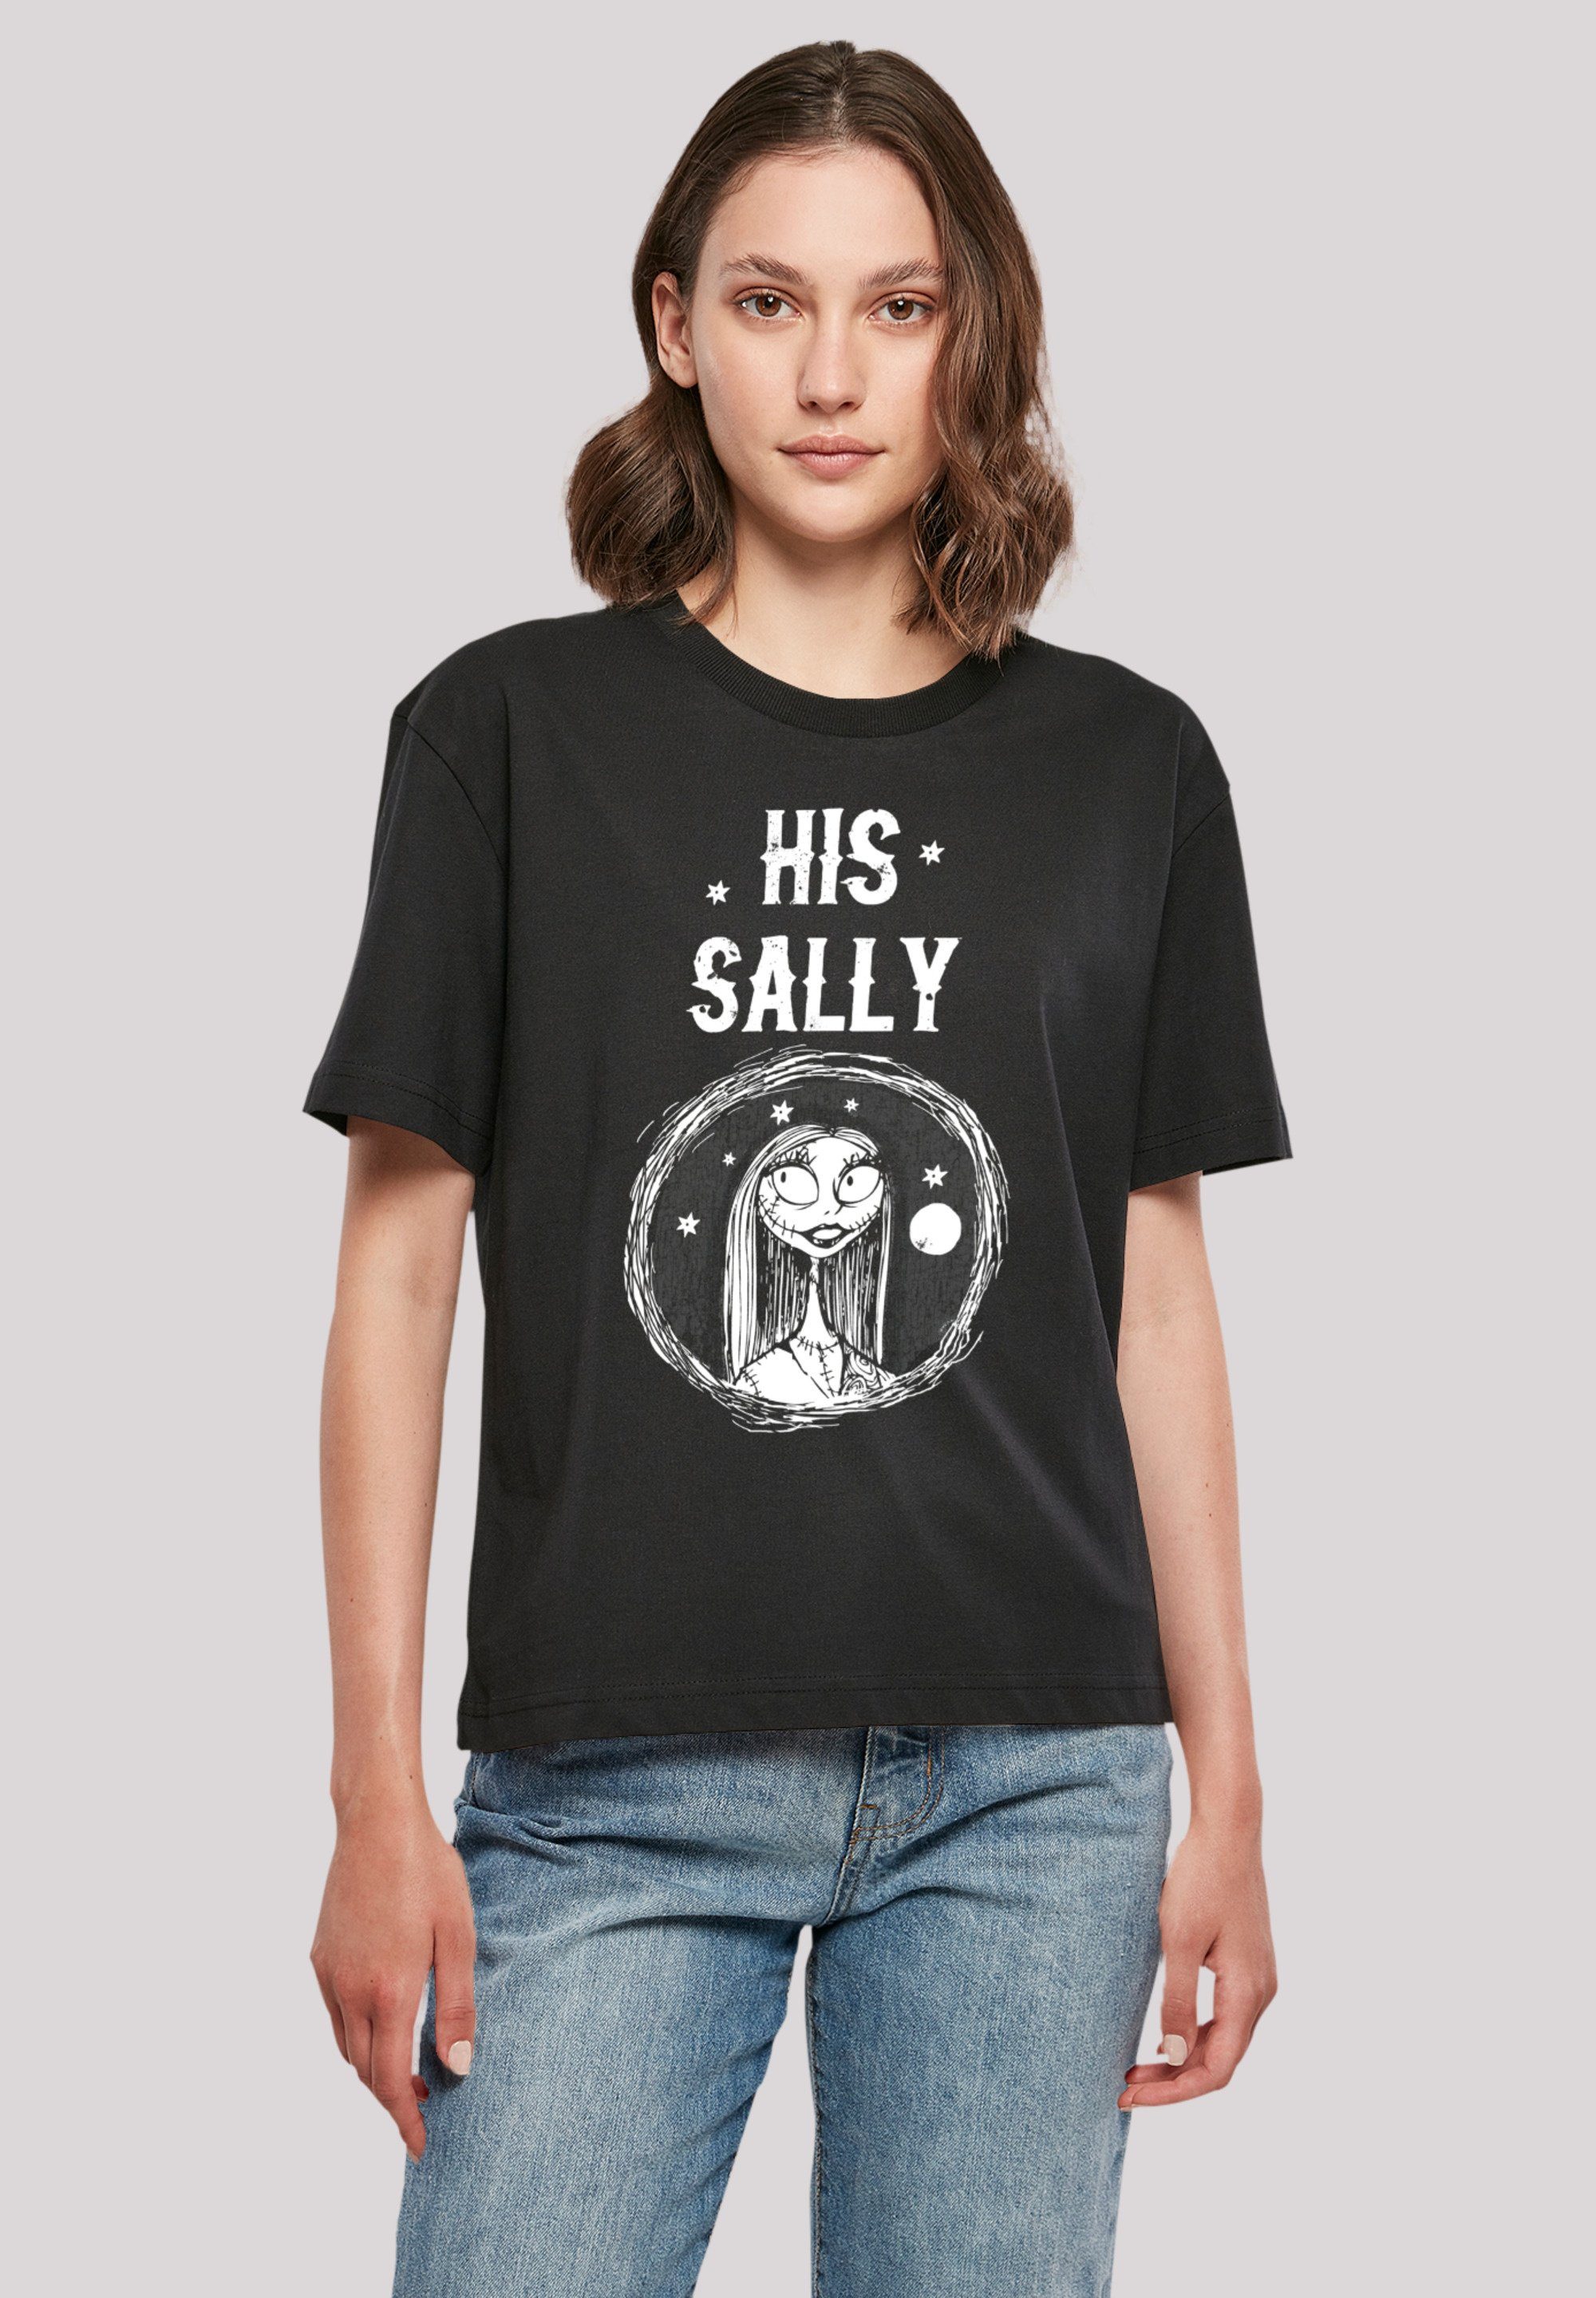 Sally Christmas Disney T-Shirt Premium His Before F4NT4STIC Nightmare Qualität